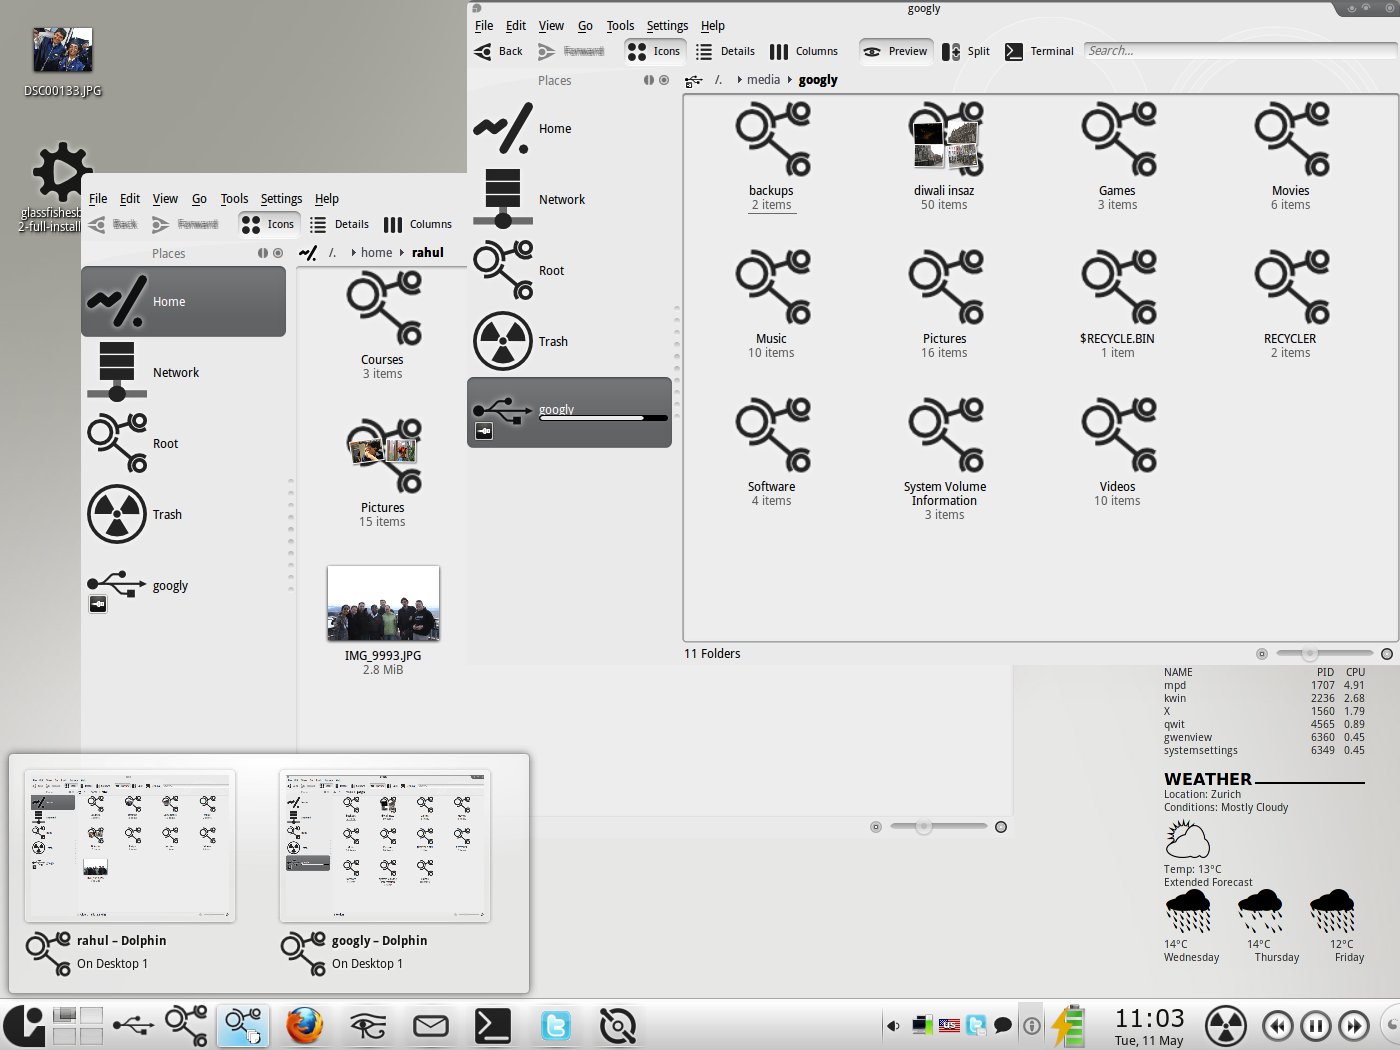 KDE Desktop with Applications